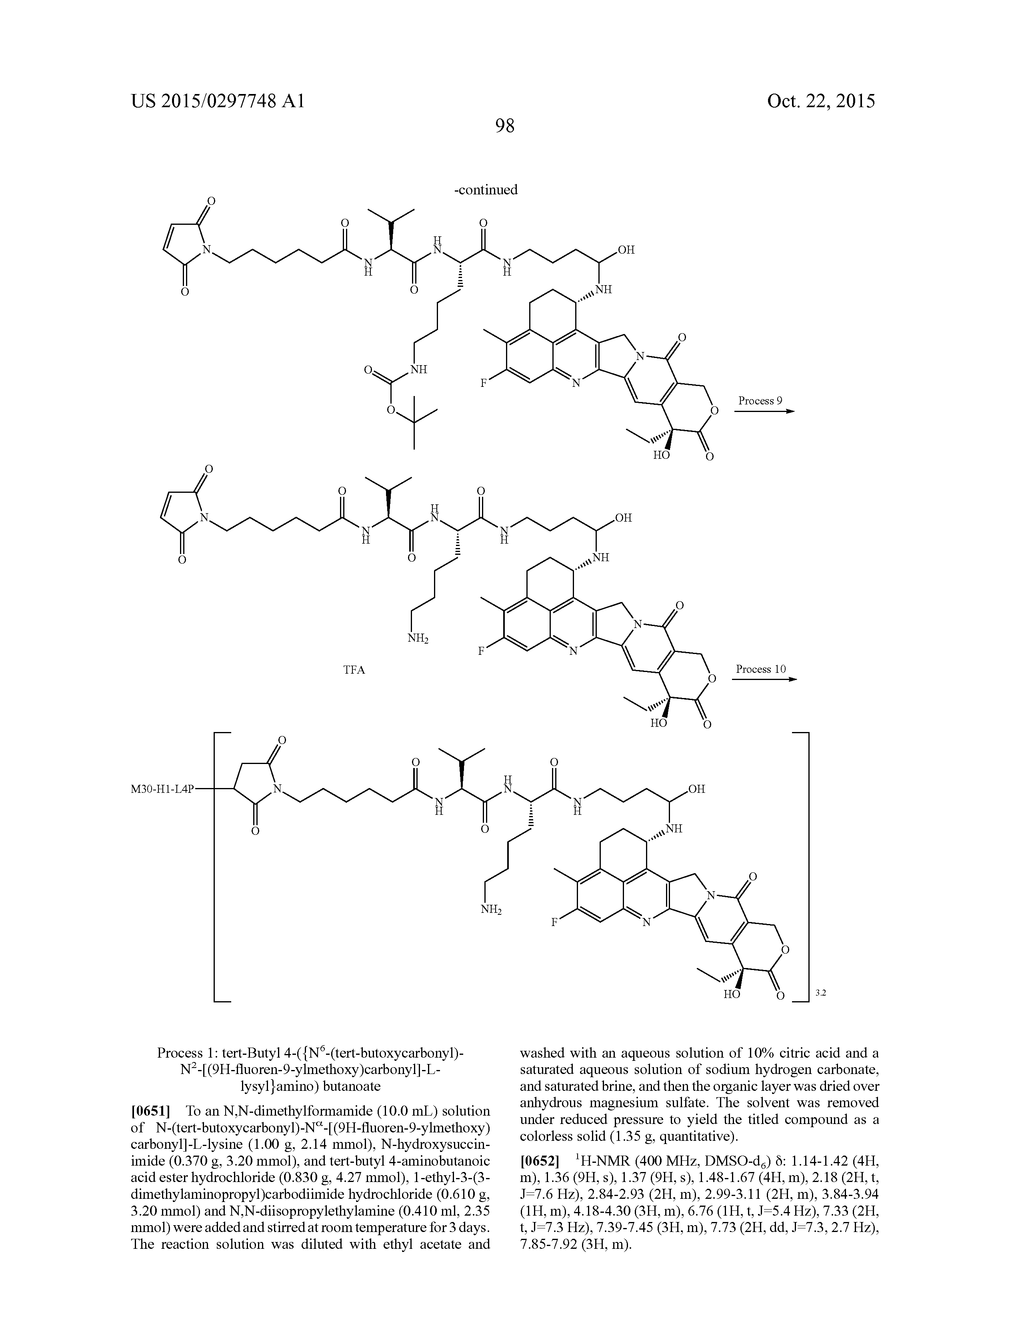 ANTIBODY-DRUG CONJUGATE - diagram, schematic, and image 120